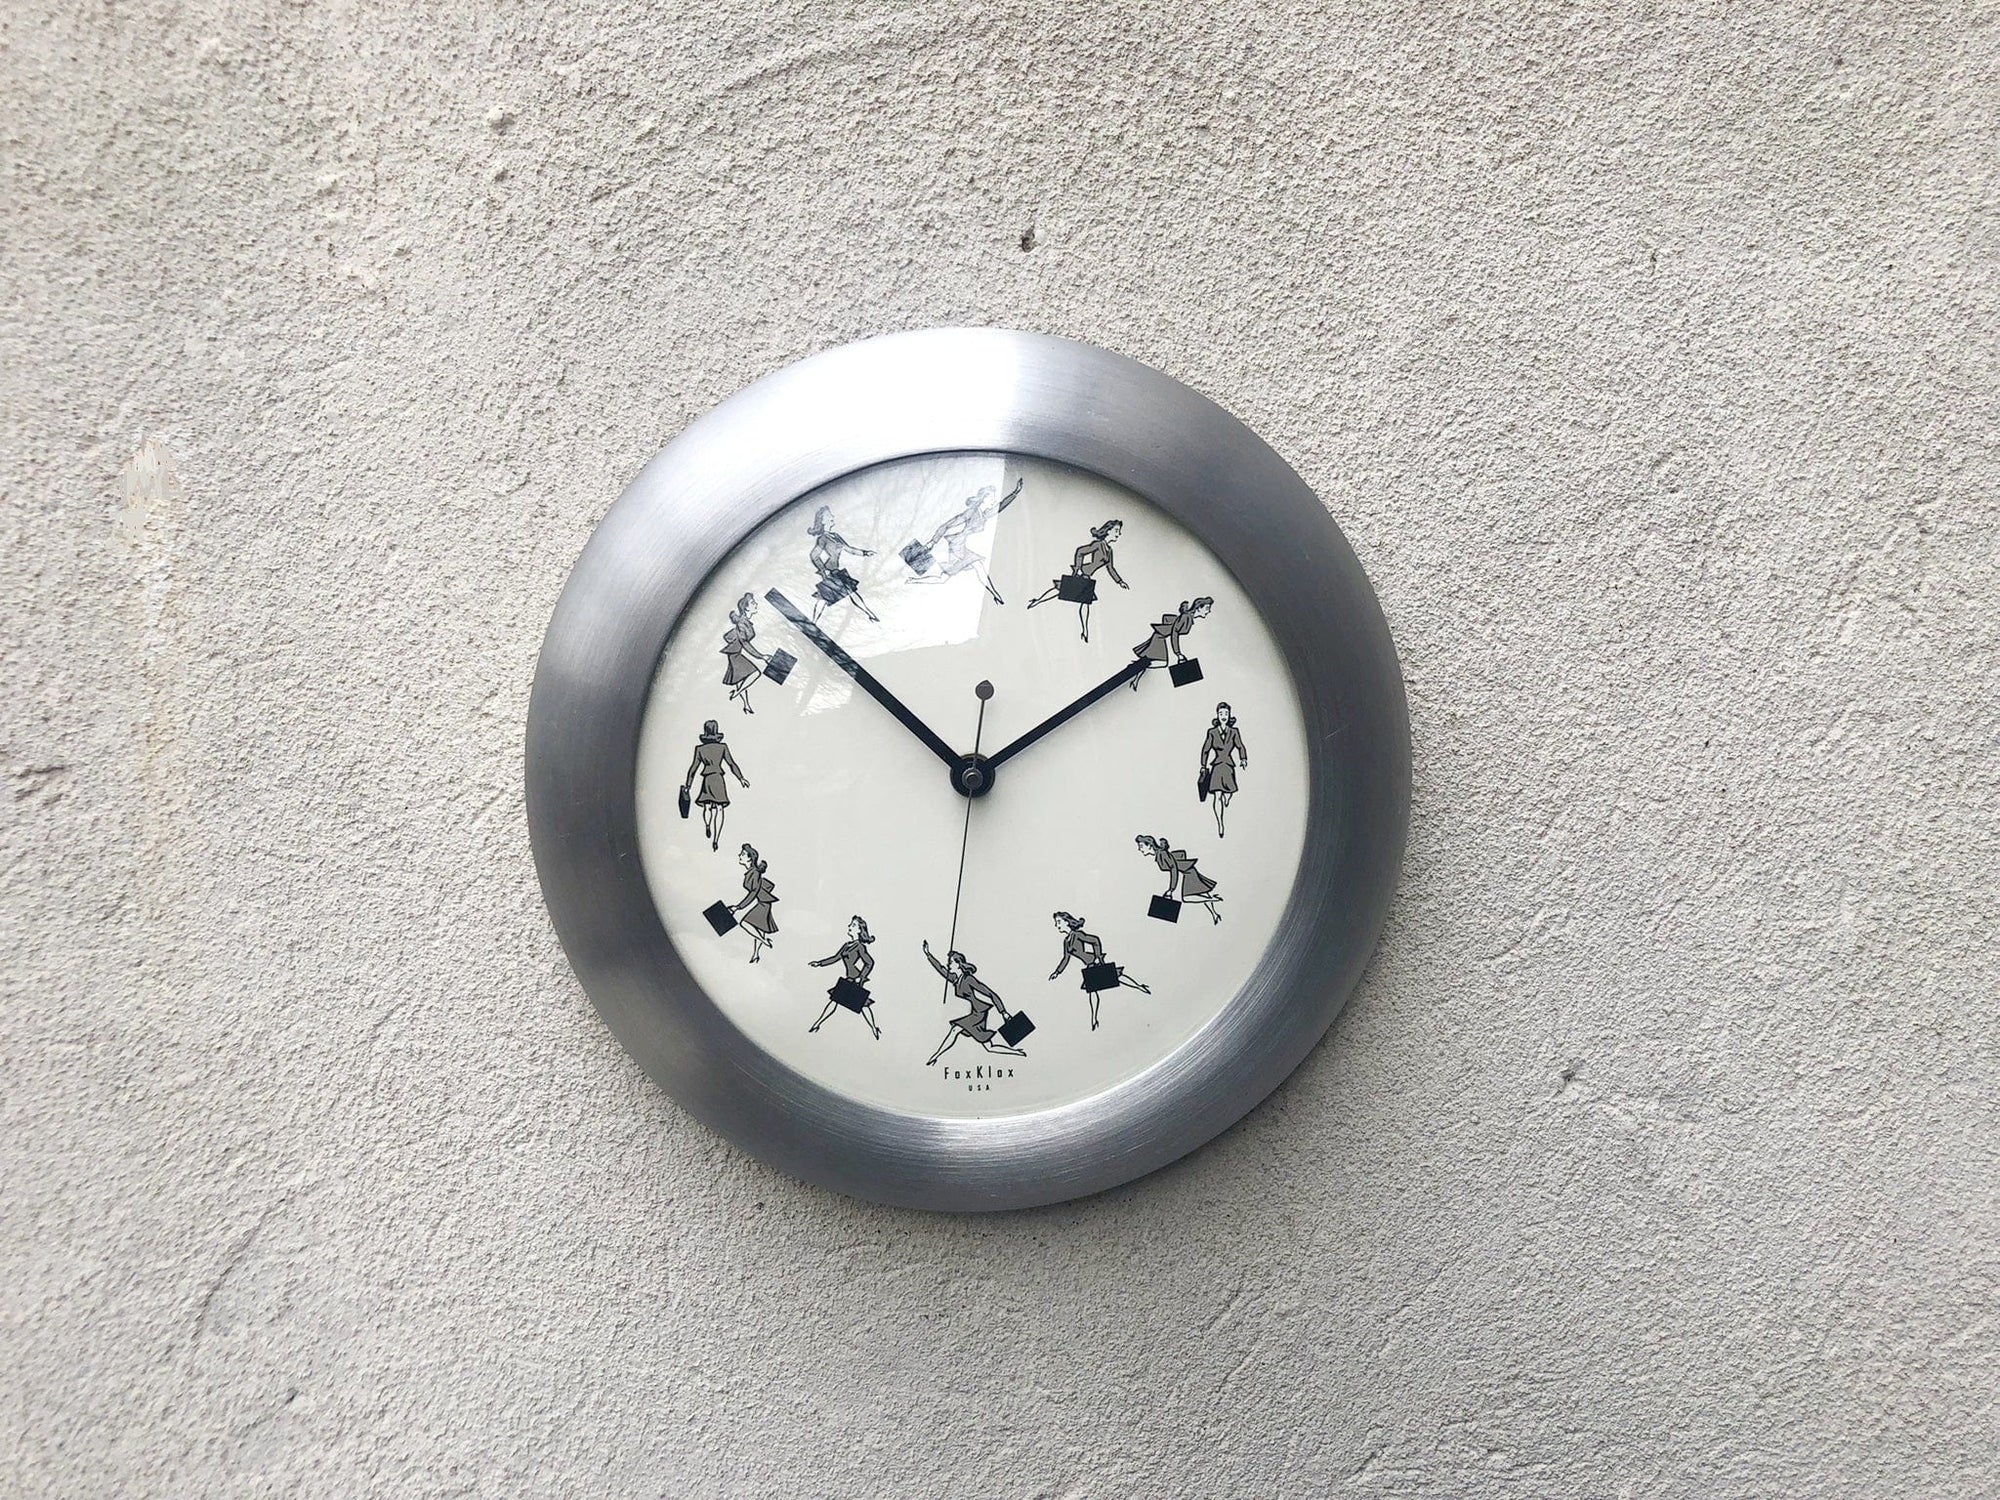 I Like Mike's Mid Century Modern Wall Clocks FoxKlox USA Wall Clock Round Brushed Aluminum, 1940's Woman On The Go